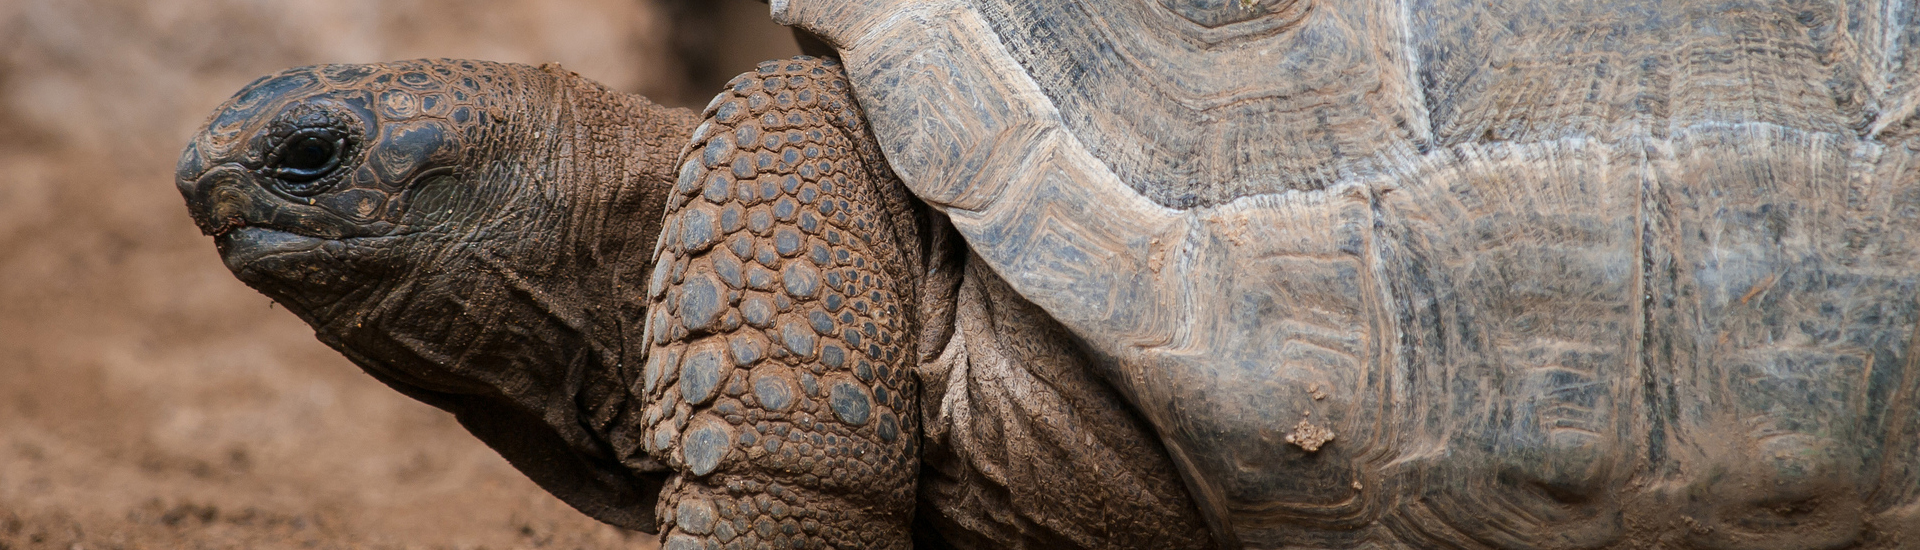 tortoise side view